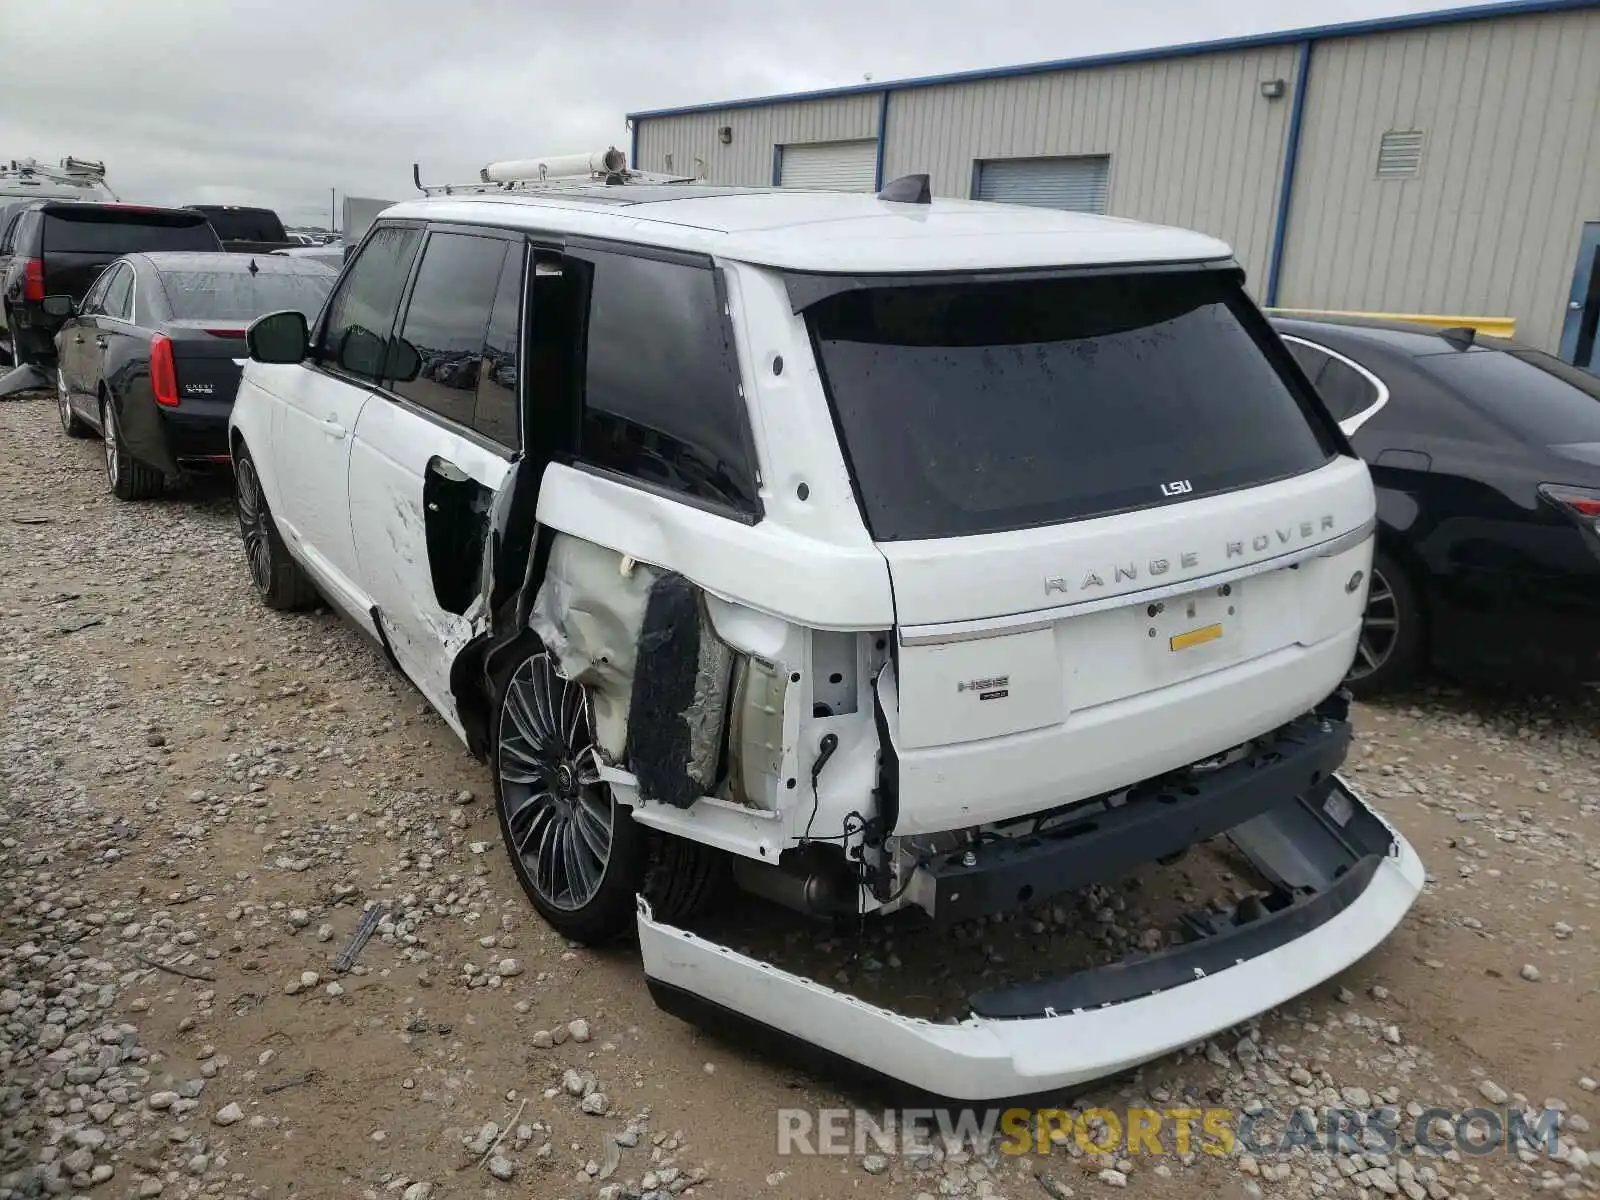 3 Photograph of a damaged car SALGS5SE1LA586150 LAND ROVER RANGEROVER 2020